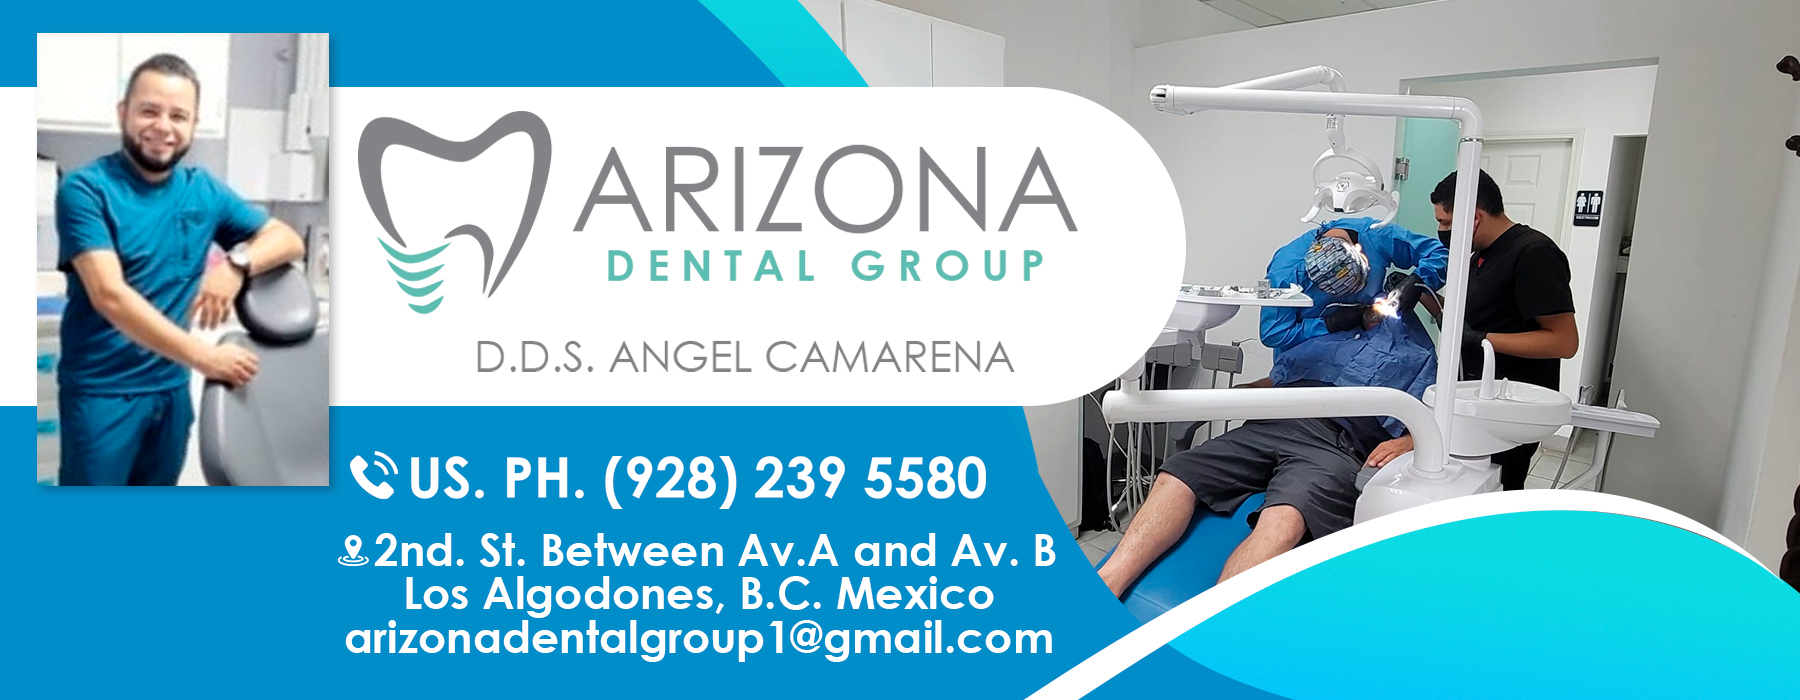  Arizona Dental Group